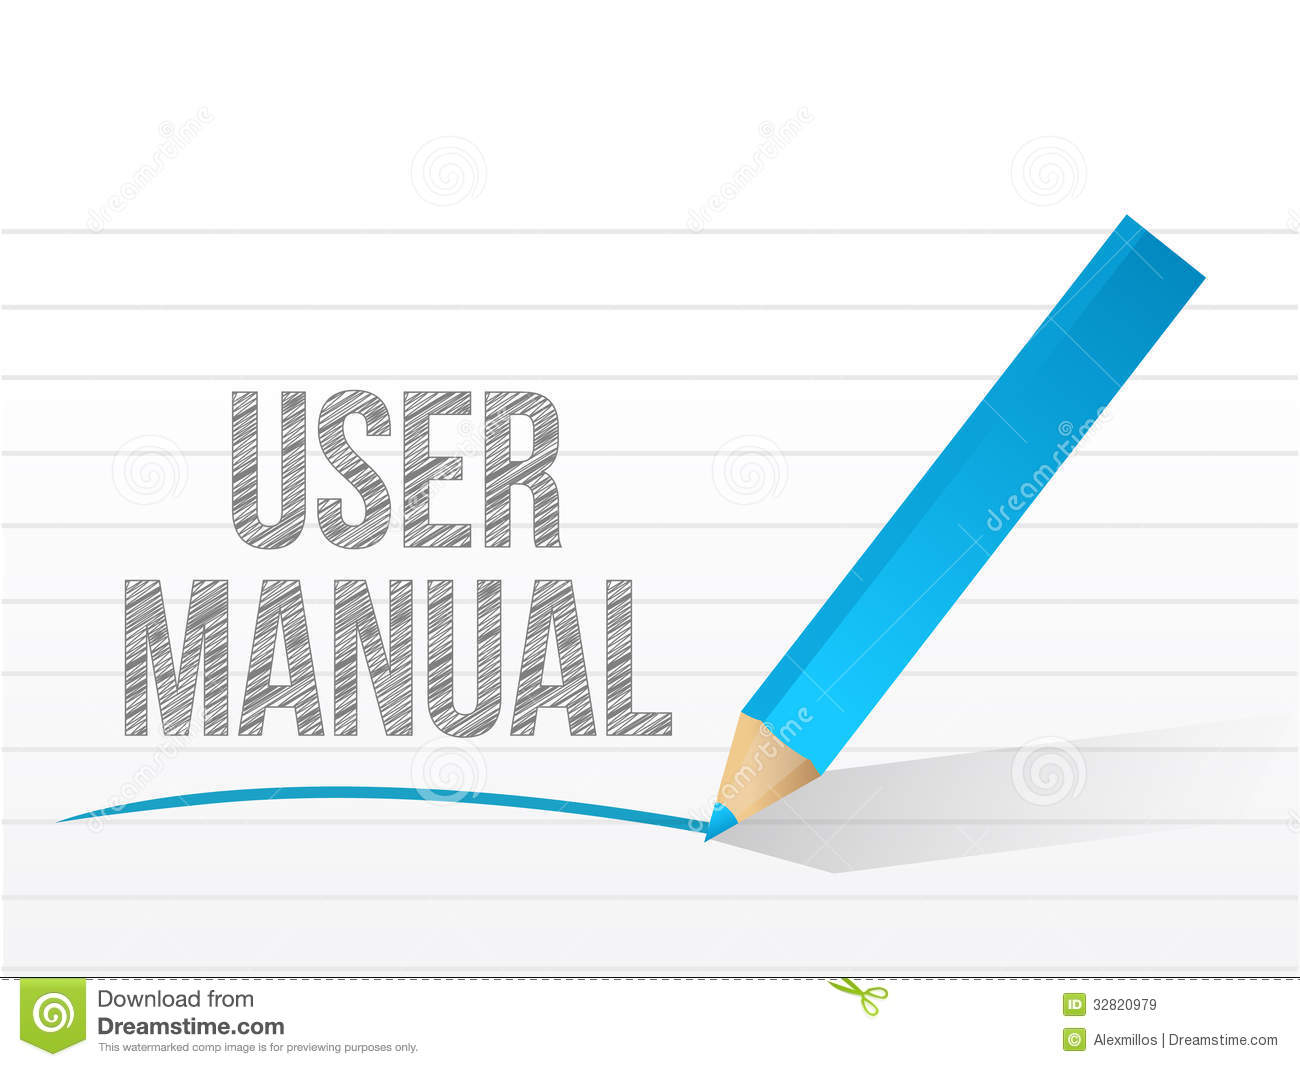 Writing a user manual